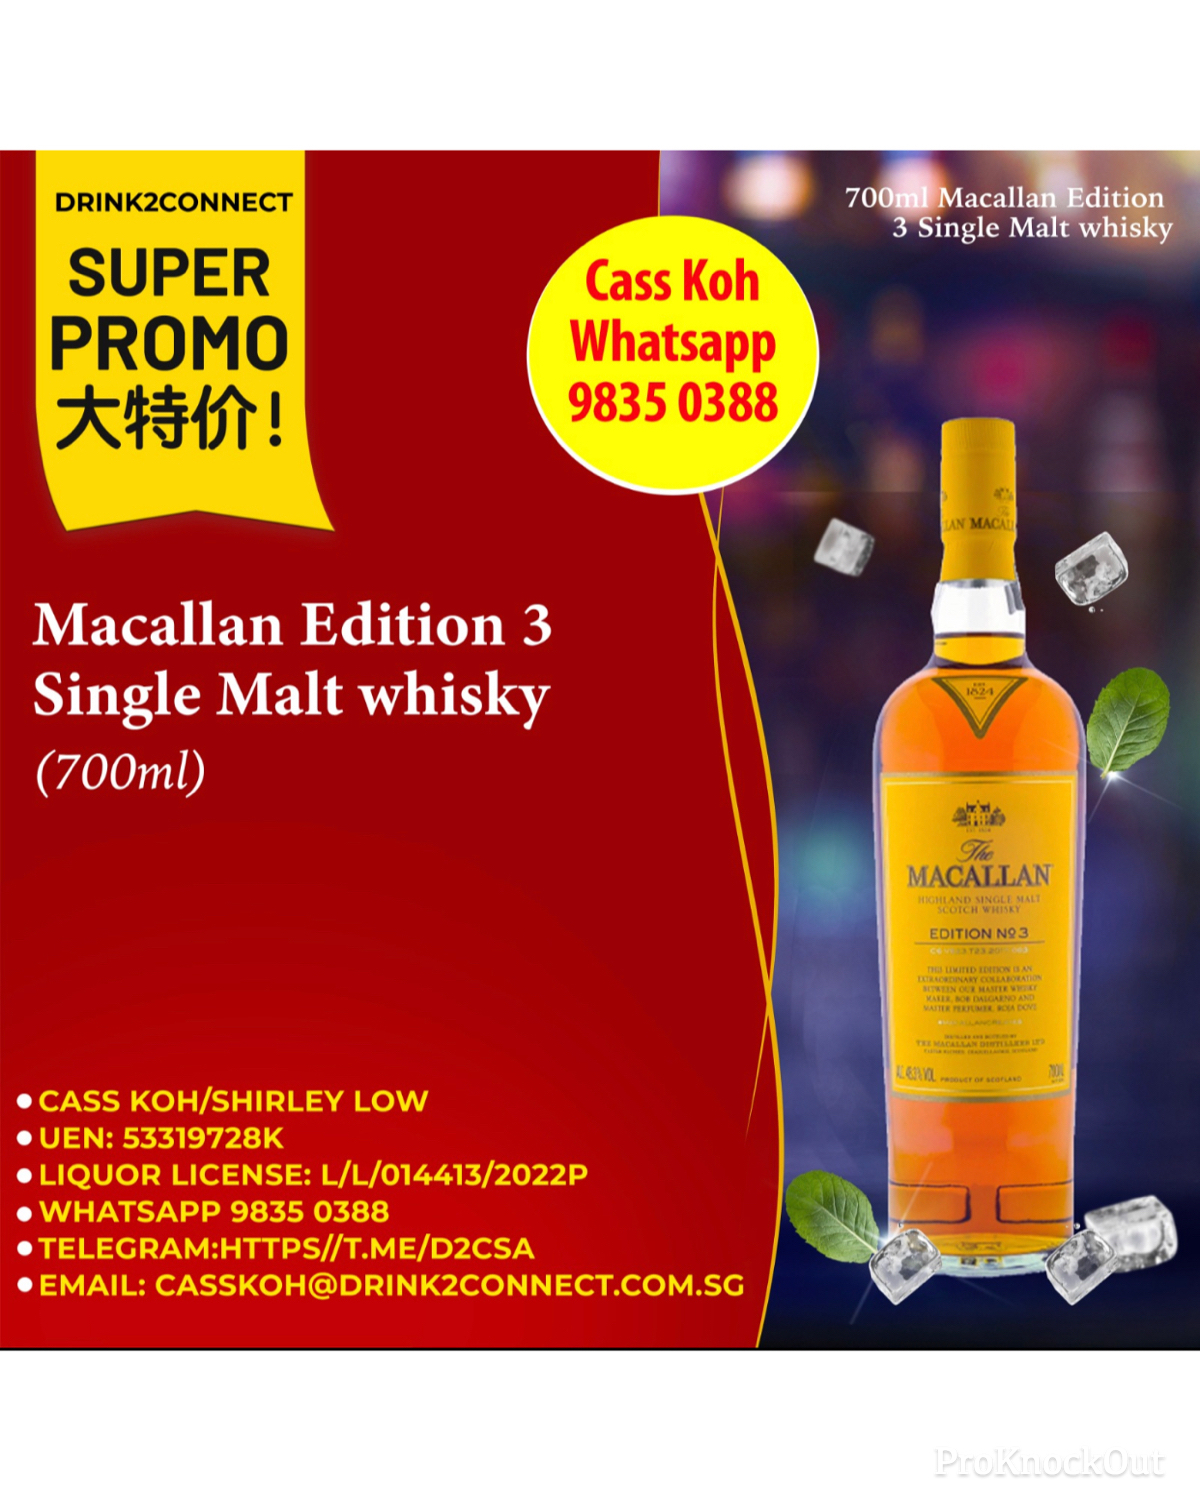 700ml Macallan Edition 3 Whisky/Macallan Whisky Sale